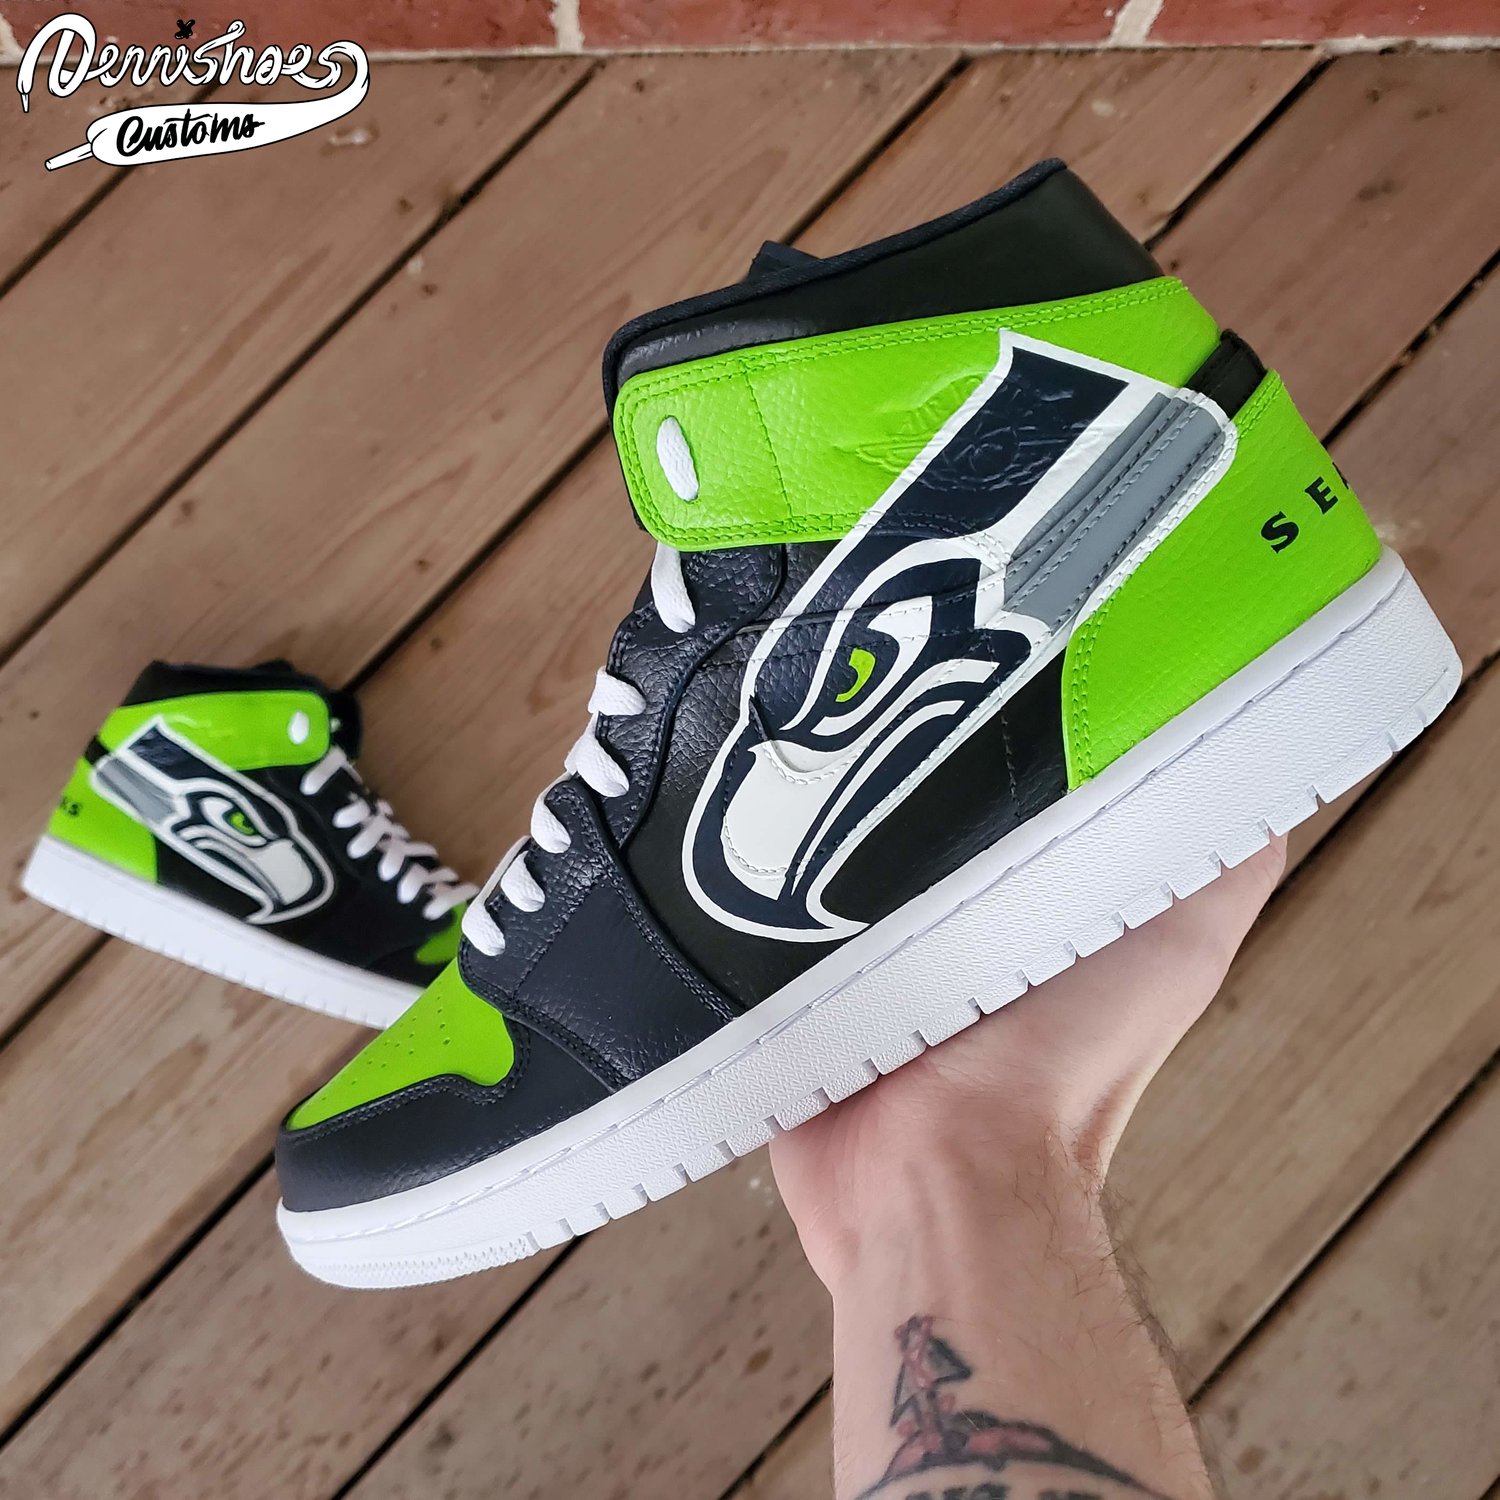 Custom Hand Painted Made To Order Nike Air Jordan 1 AJ1 Mid Shoes